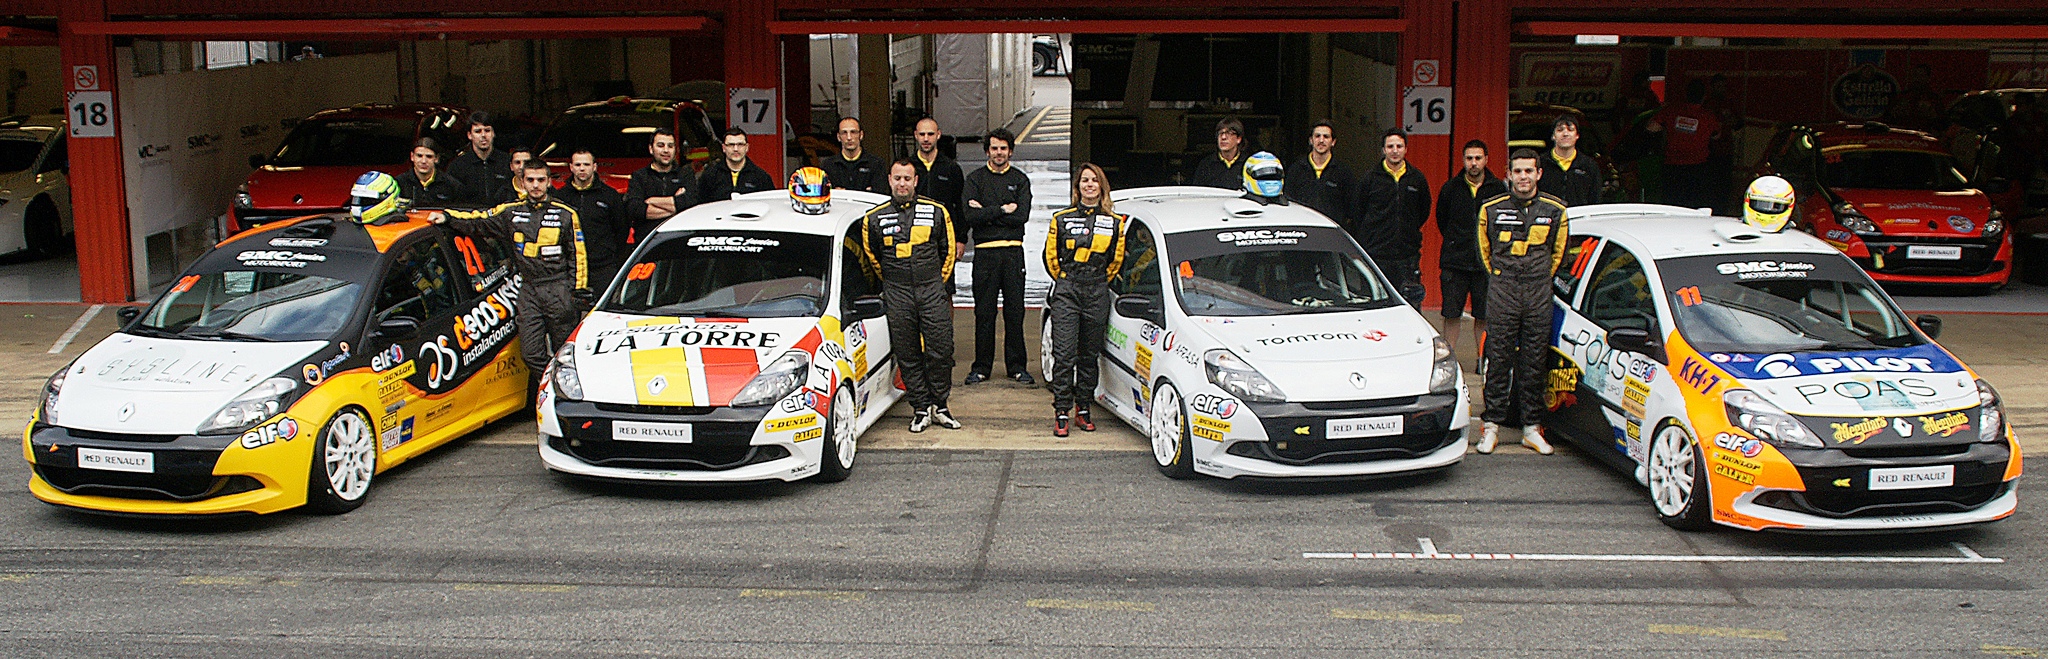 Equipo Renault Clio Cup SMC Junior Motorsport